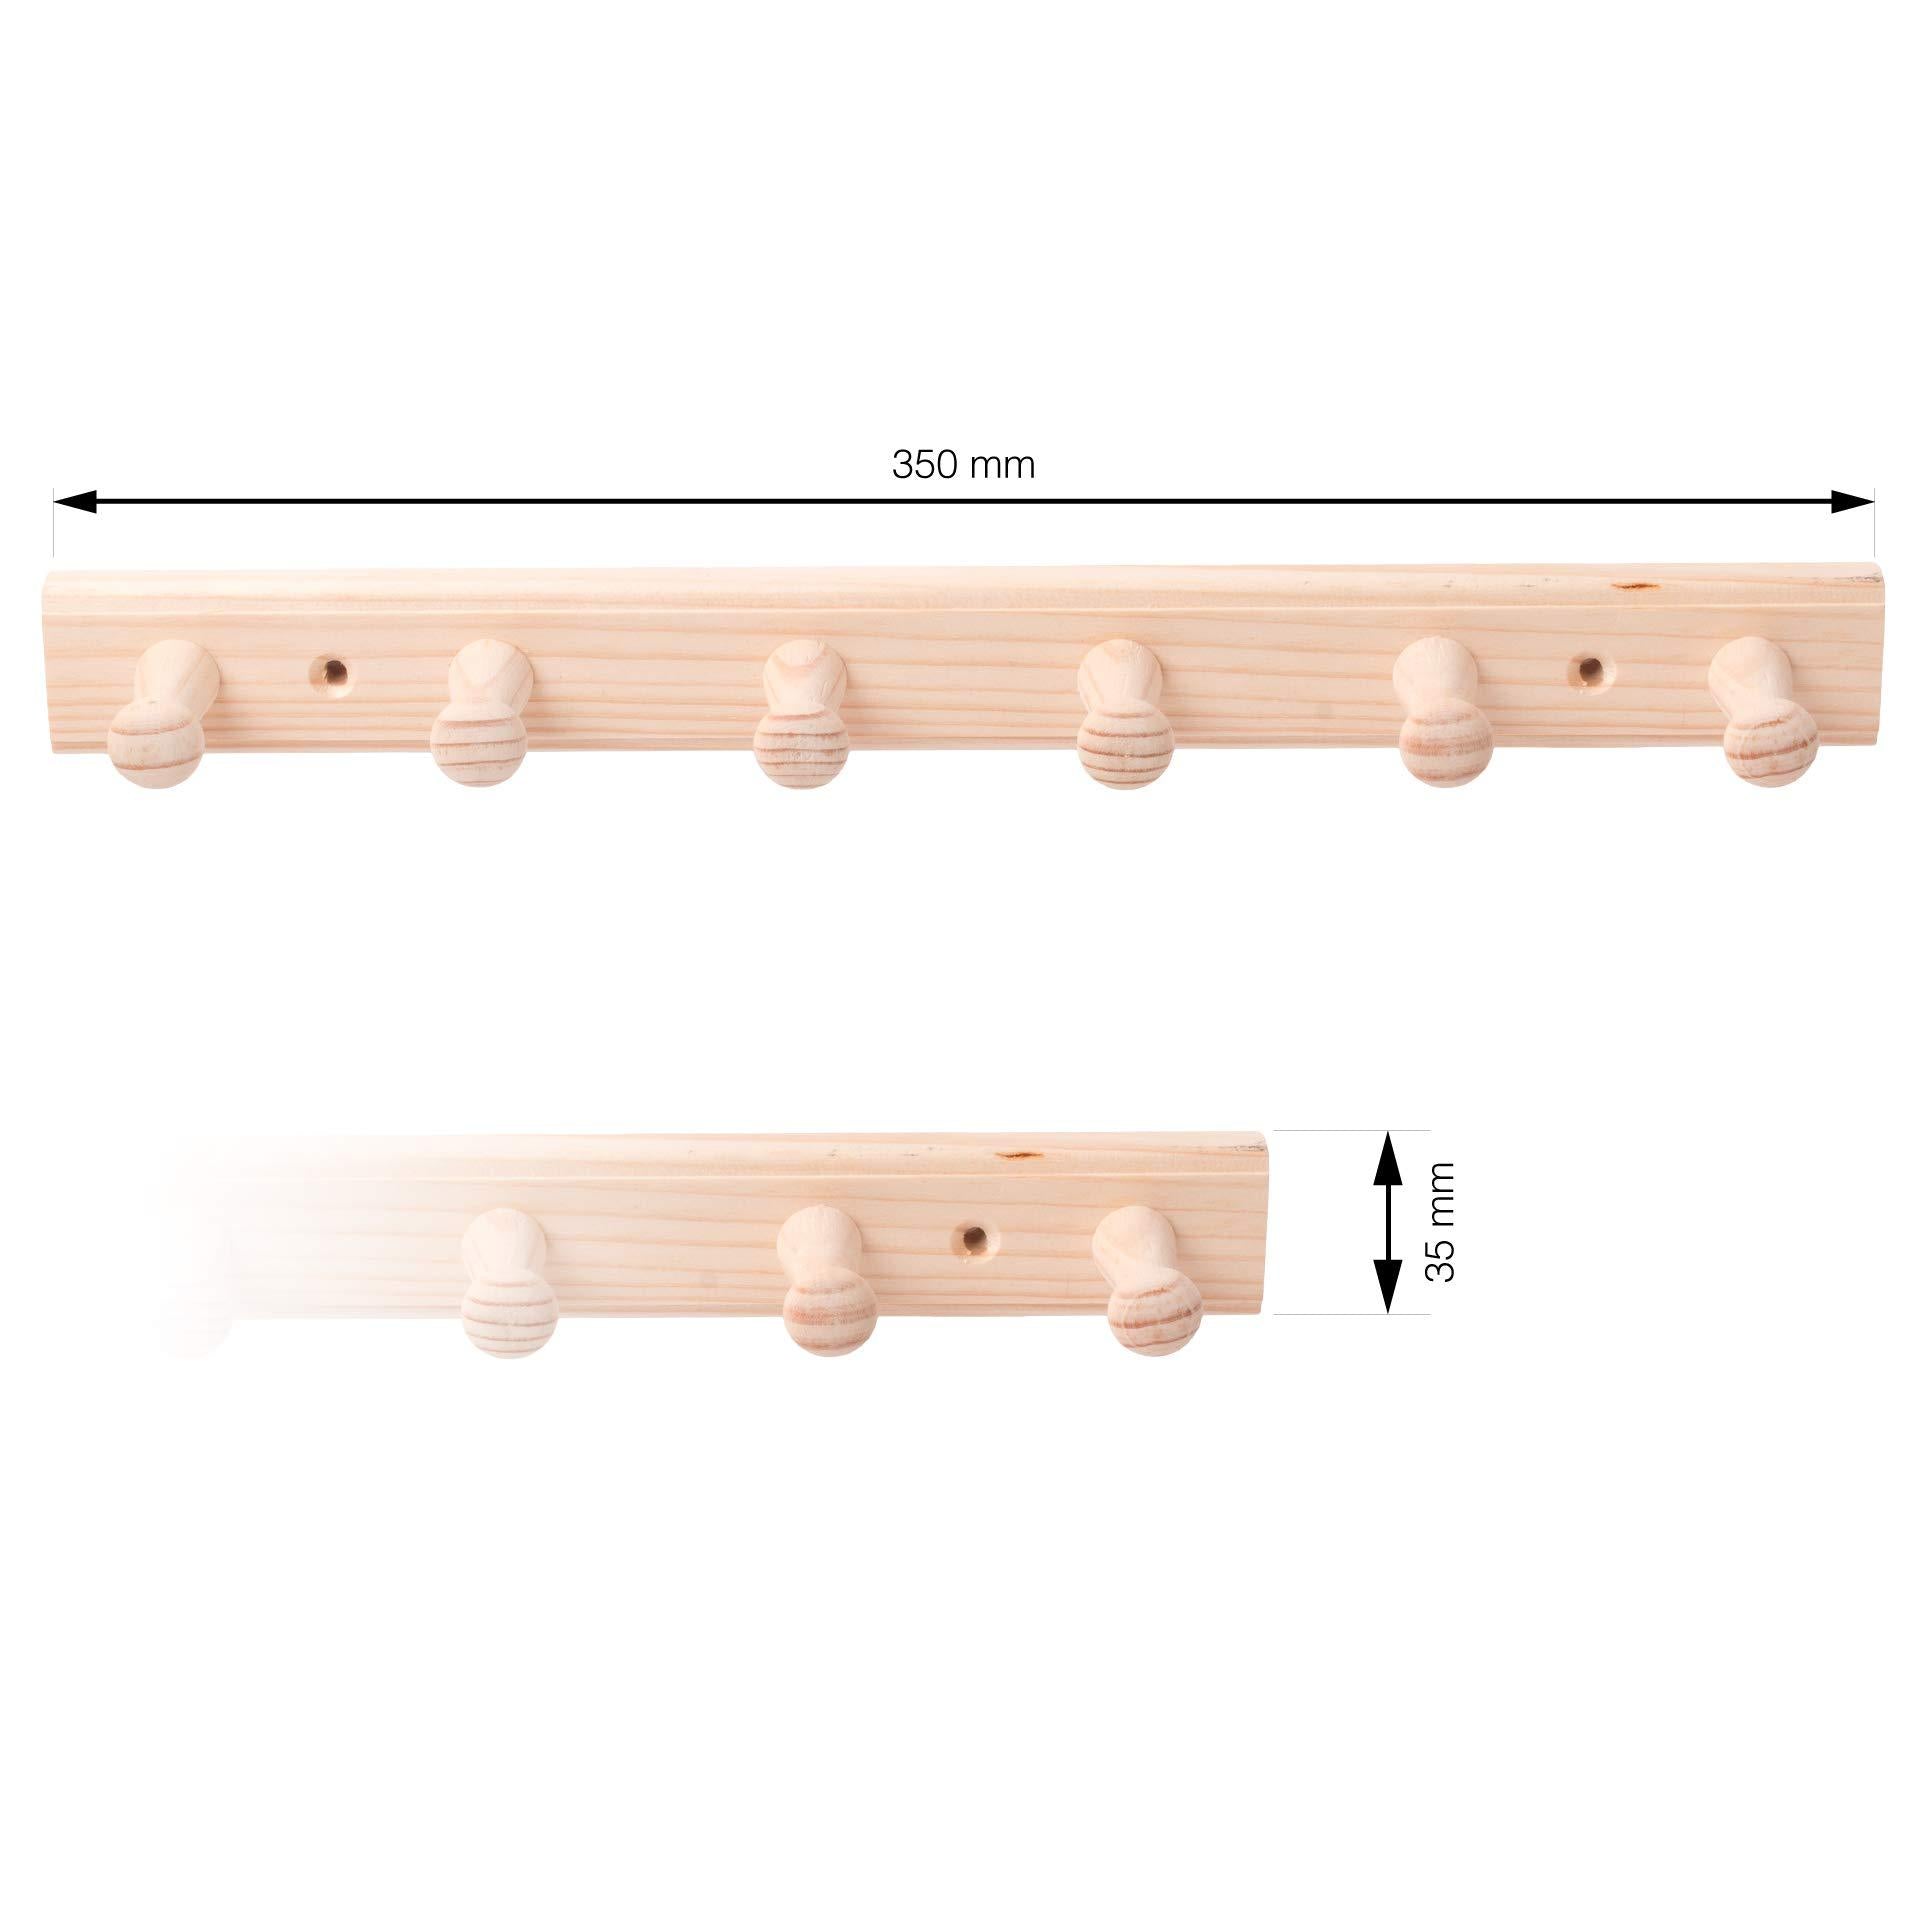 LouMaxx Hakenleiste Holz aus Kiefer mit 6 Holzhaken – Wandgarderobe Holz - Garderobe Kinder - Garderobe Holz - Kleiderhaken Holz zur Wandbefestigung